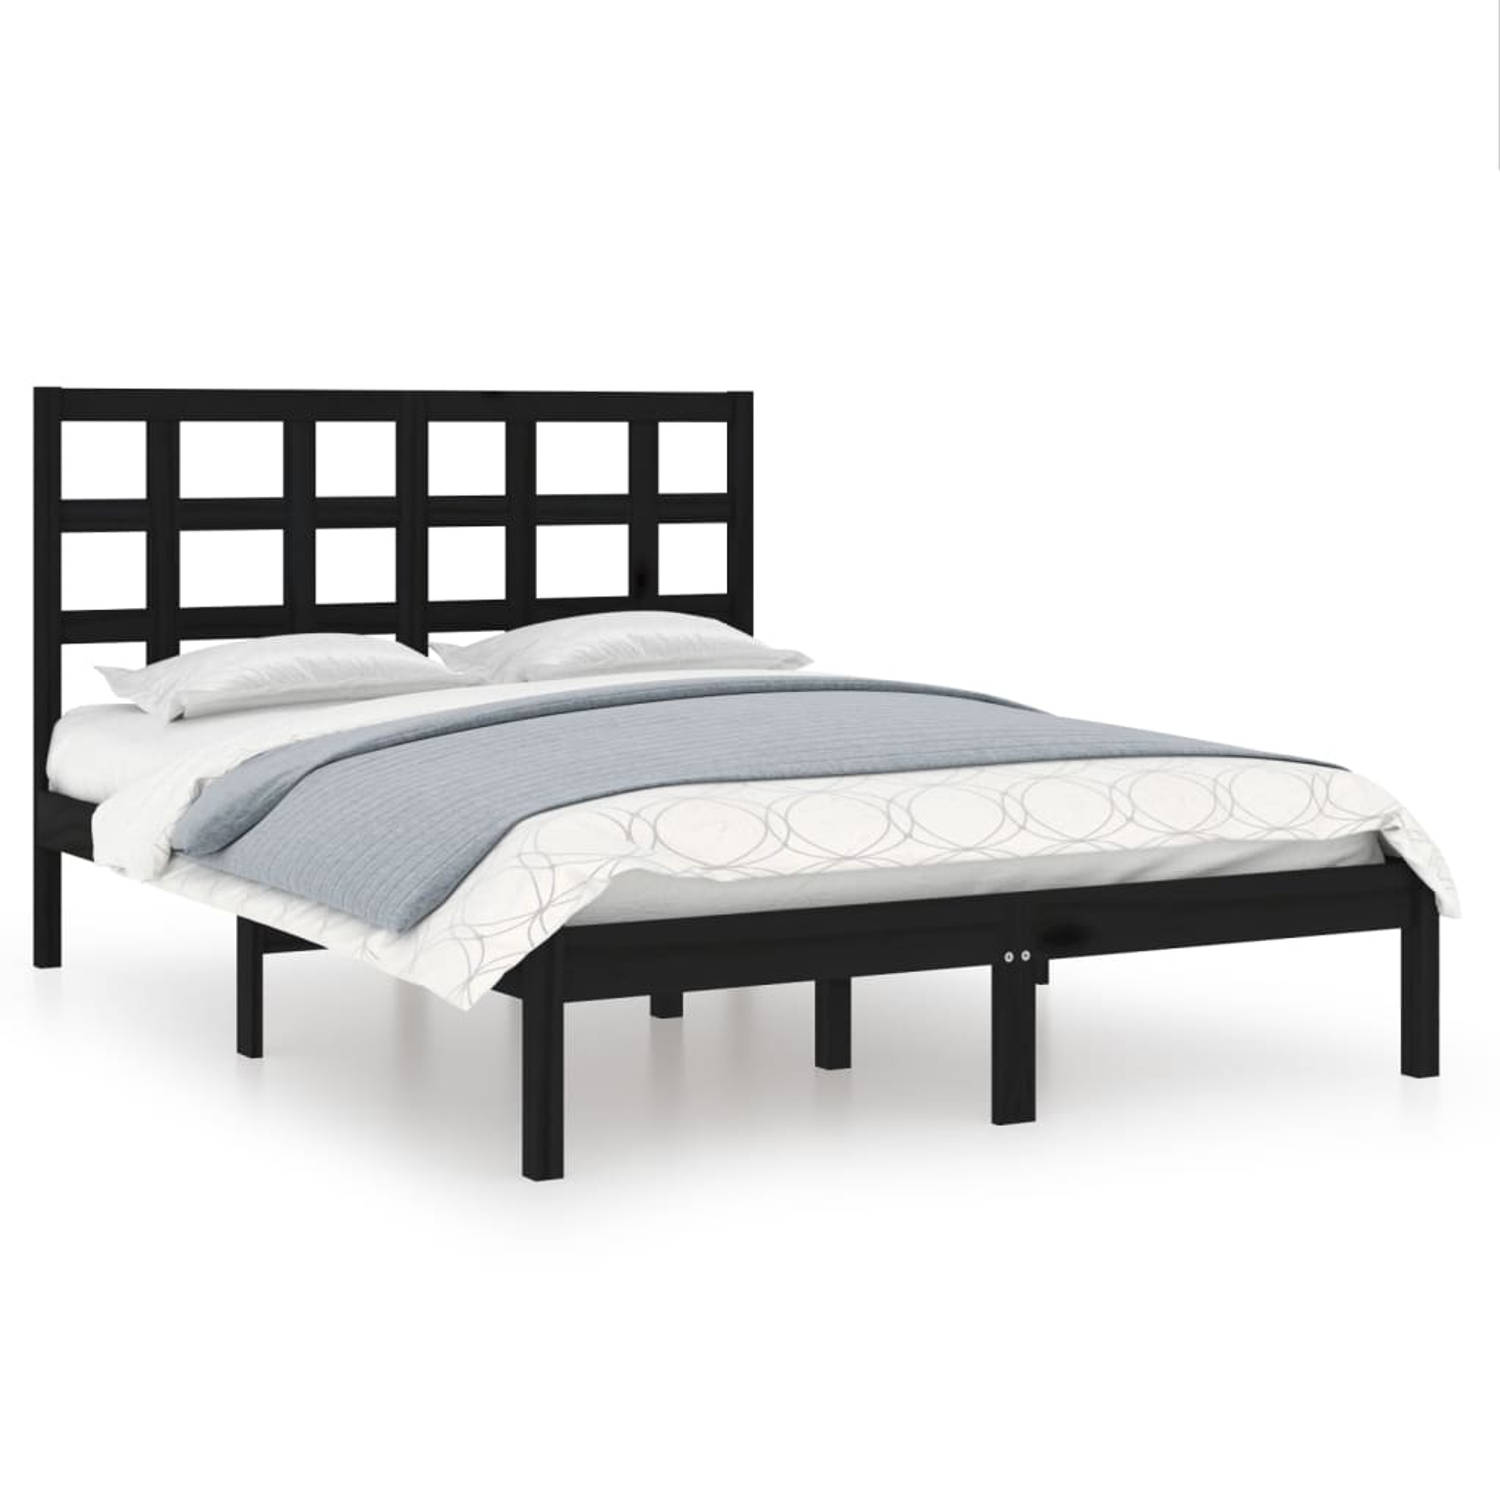 The Living Store Bedframe massief hout zwart 140x200 cm - Bedframe - Bedframes - Tweepersoonsbed - Bed - Bedombouw - Dubbel Bed - Frame - Bed Frame - Ledikant - Houten Bedframe - T